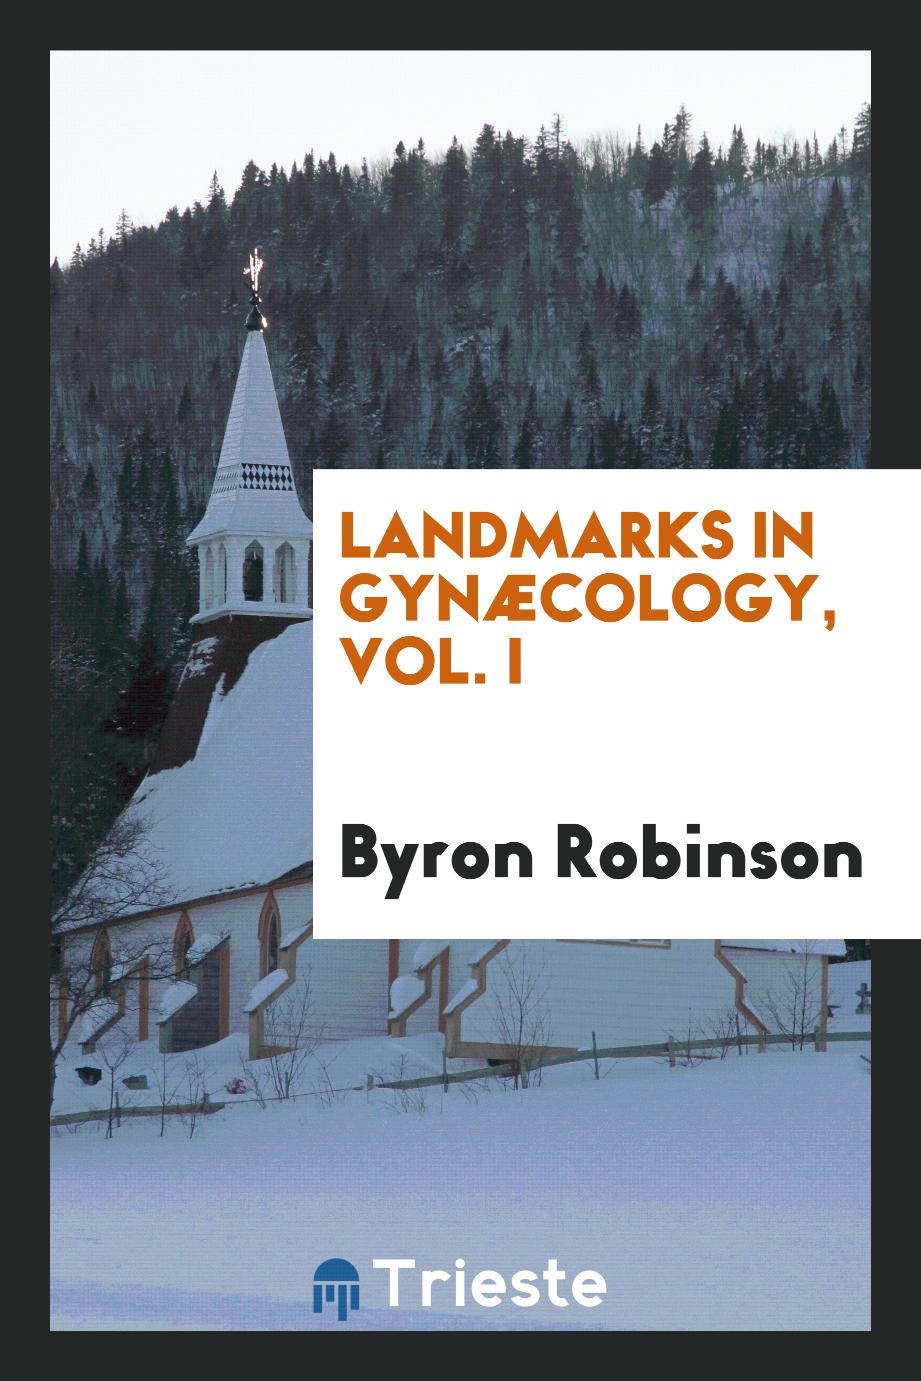 Landmarks in Gynæcology, Vol. I